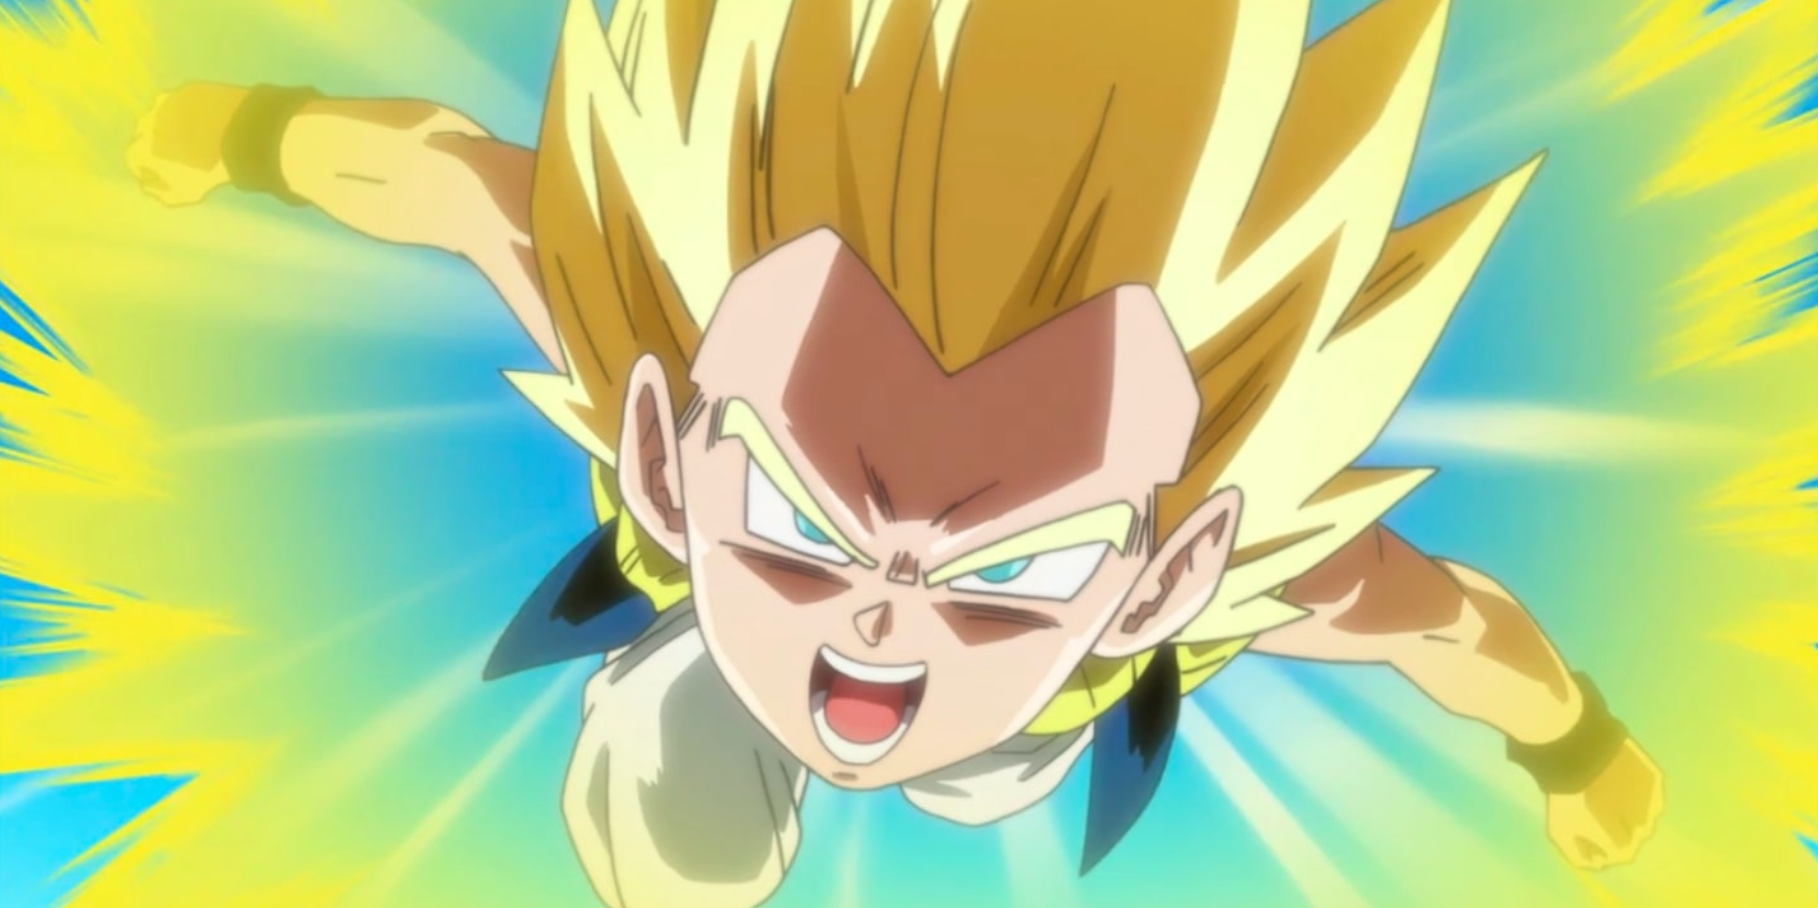 Anime Gotenks in Dragon Ball Super's Resurrection 'F' arc